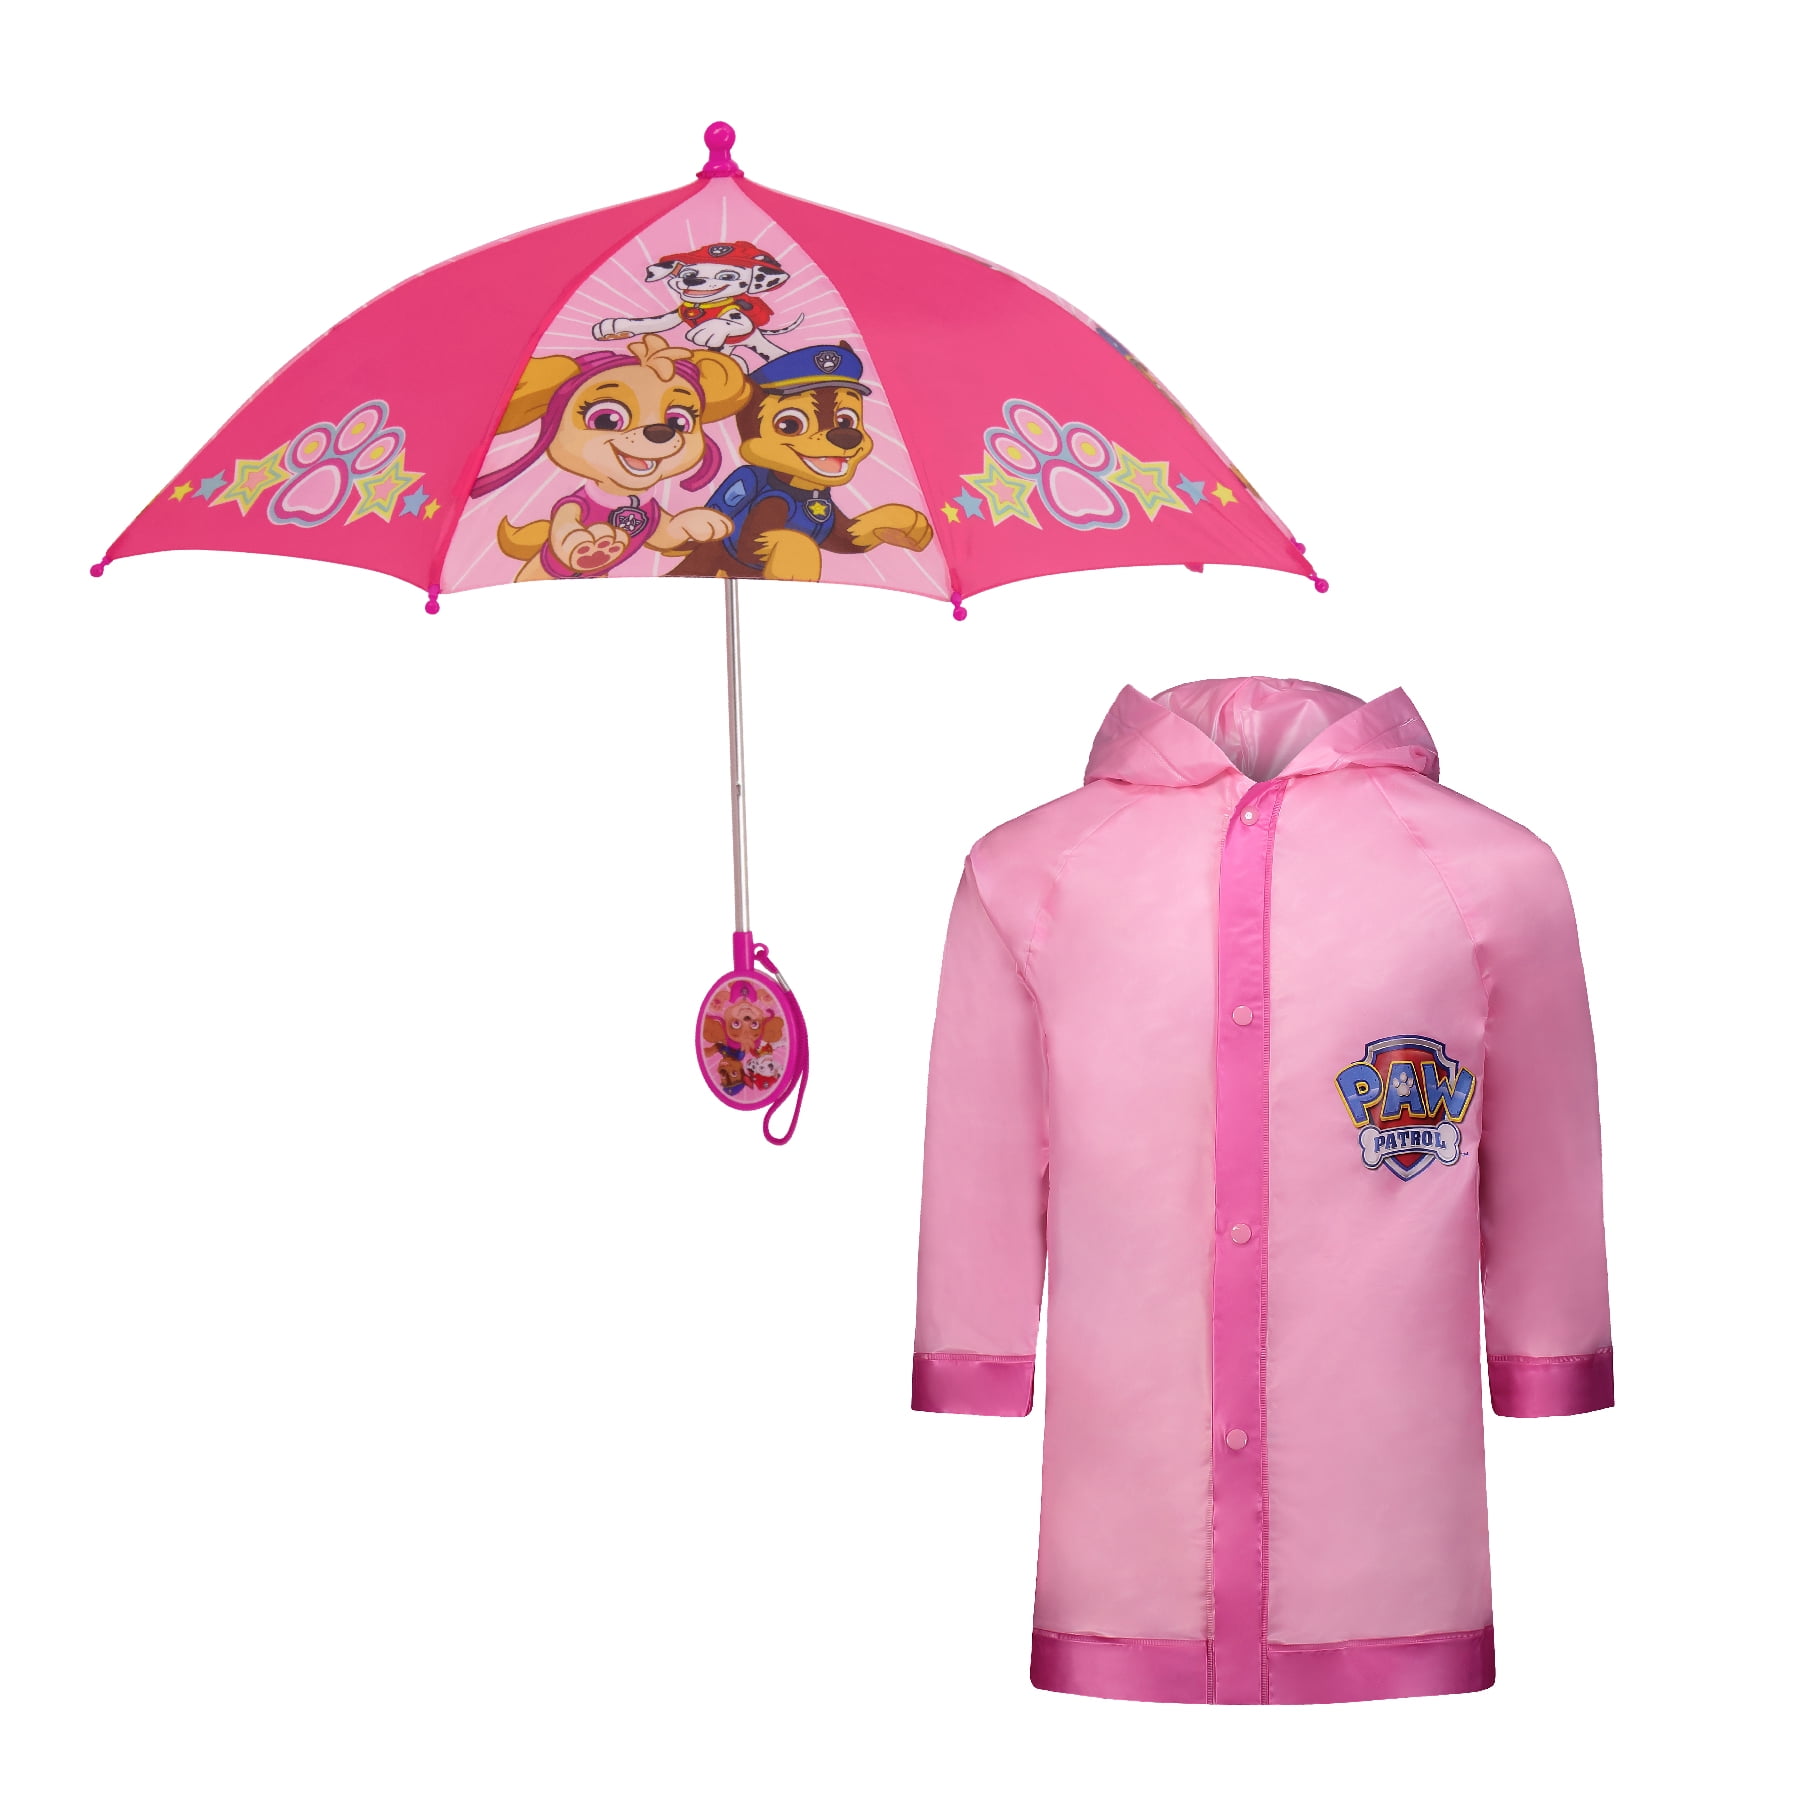 Nickelodeon Paw Patrol Boys Kids Umbrella Gift Toy Blue Chase Marshall Rain Girl 